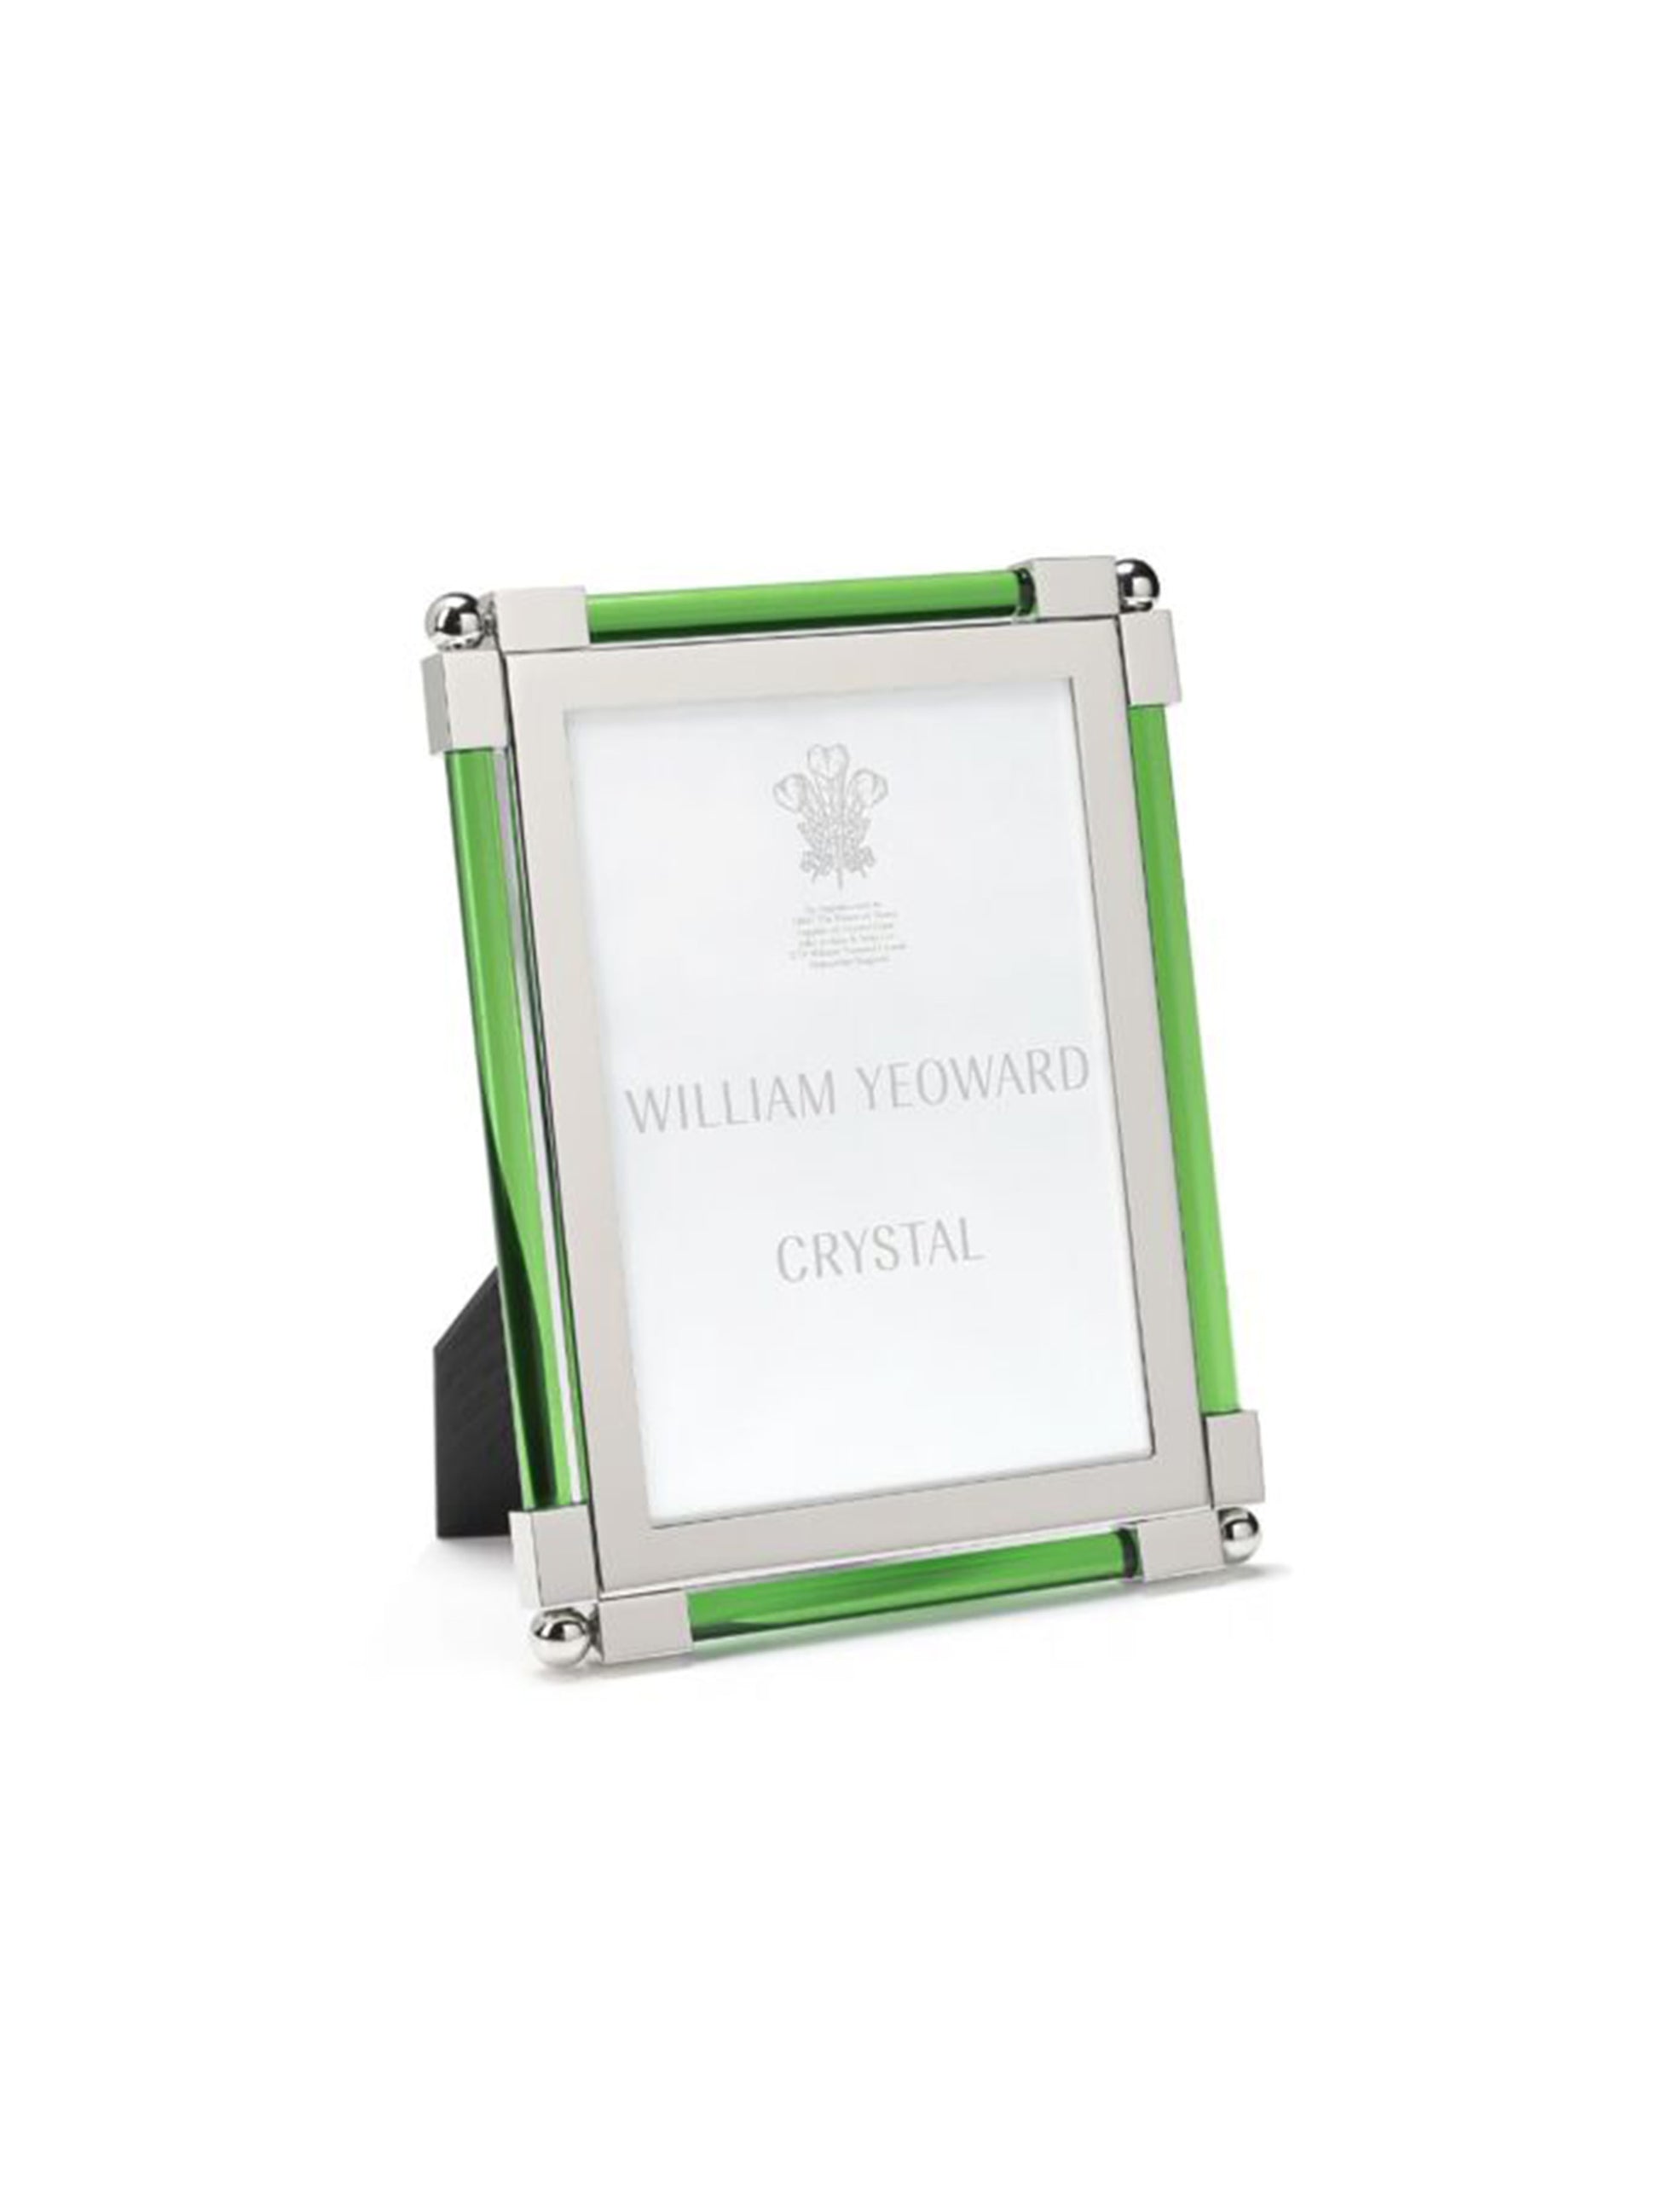 William Yeoward Crystal Classic Green Photo Frame 5 x 7 Weston Table